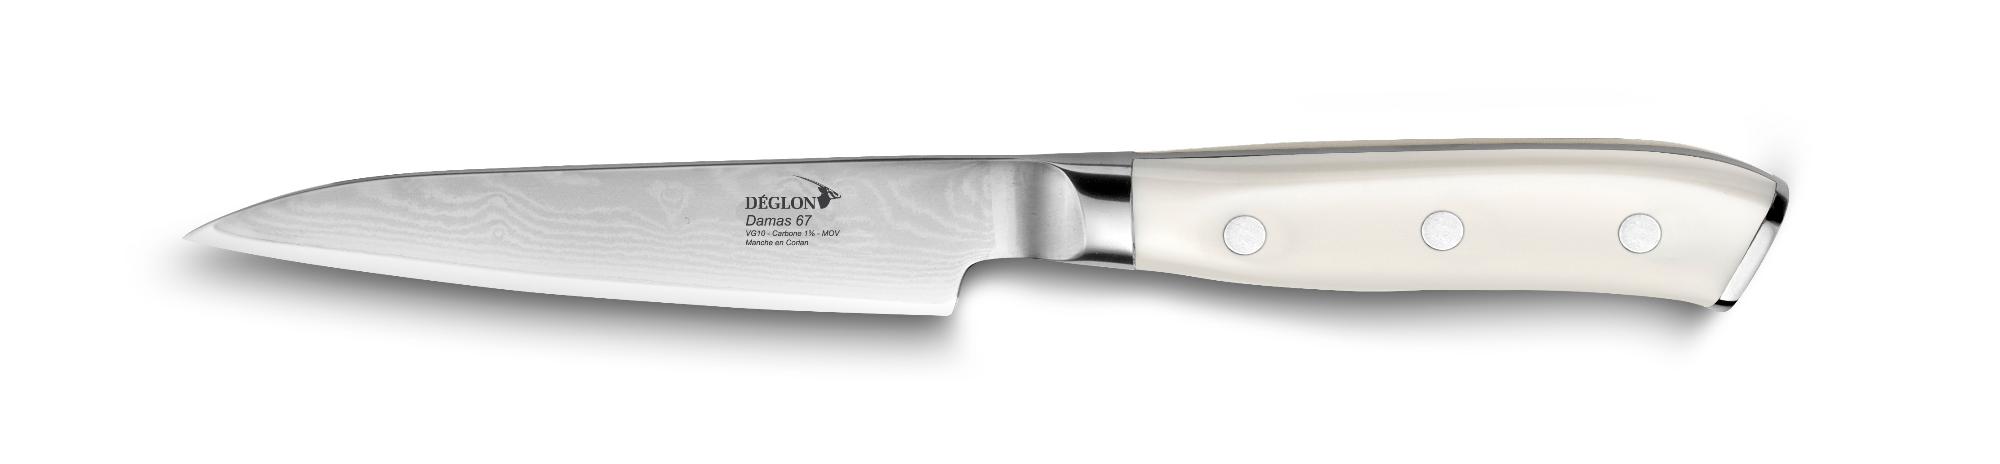 Damas 67 kitchen knife, 110mm